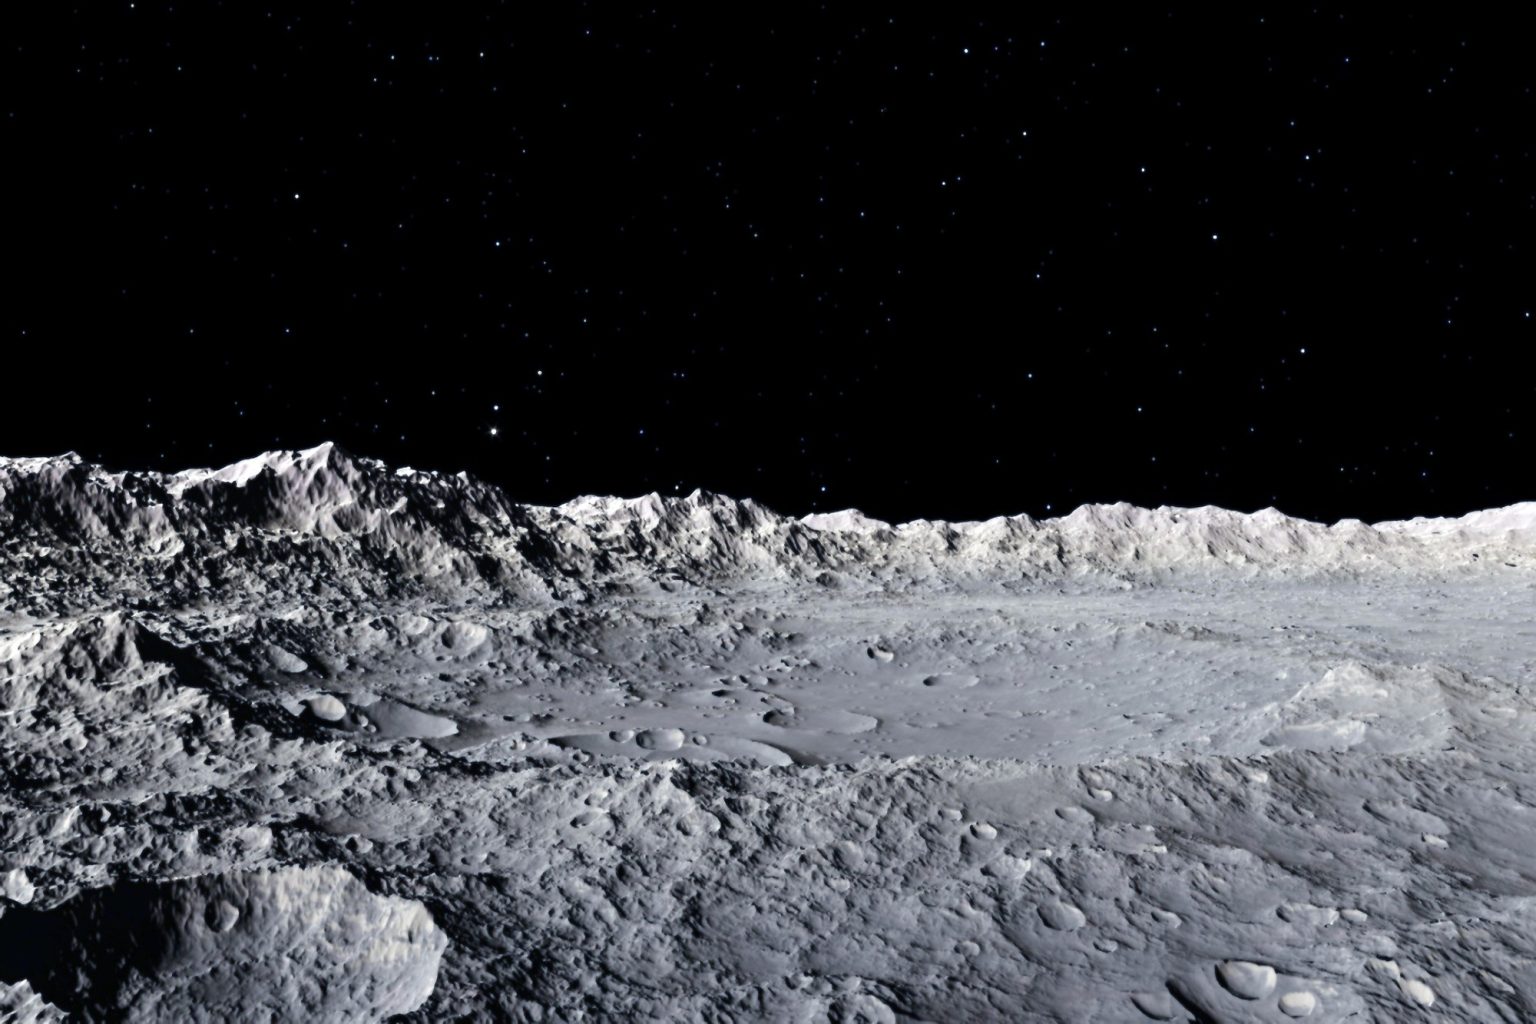 Снимки поверхности Луны